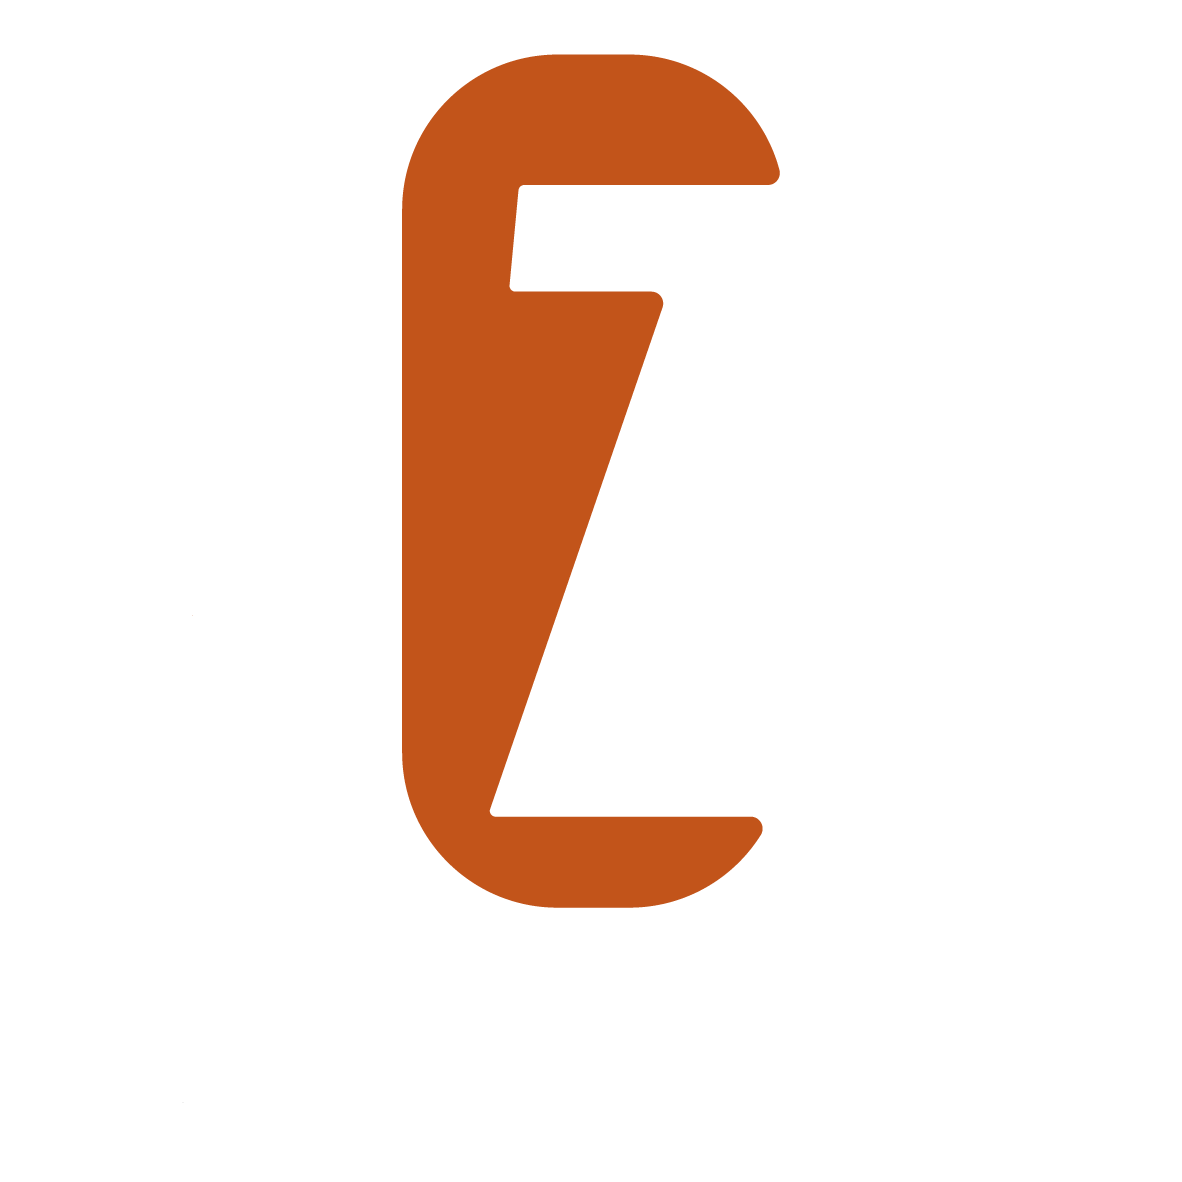 Cataplum 7